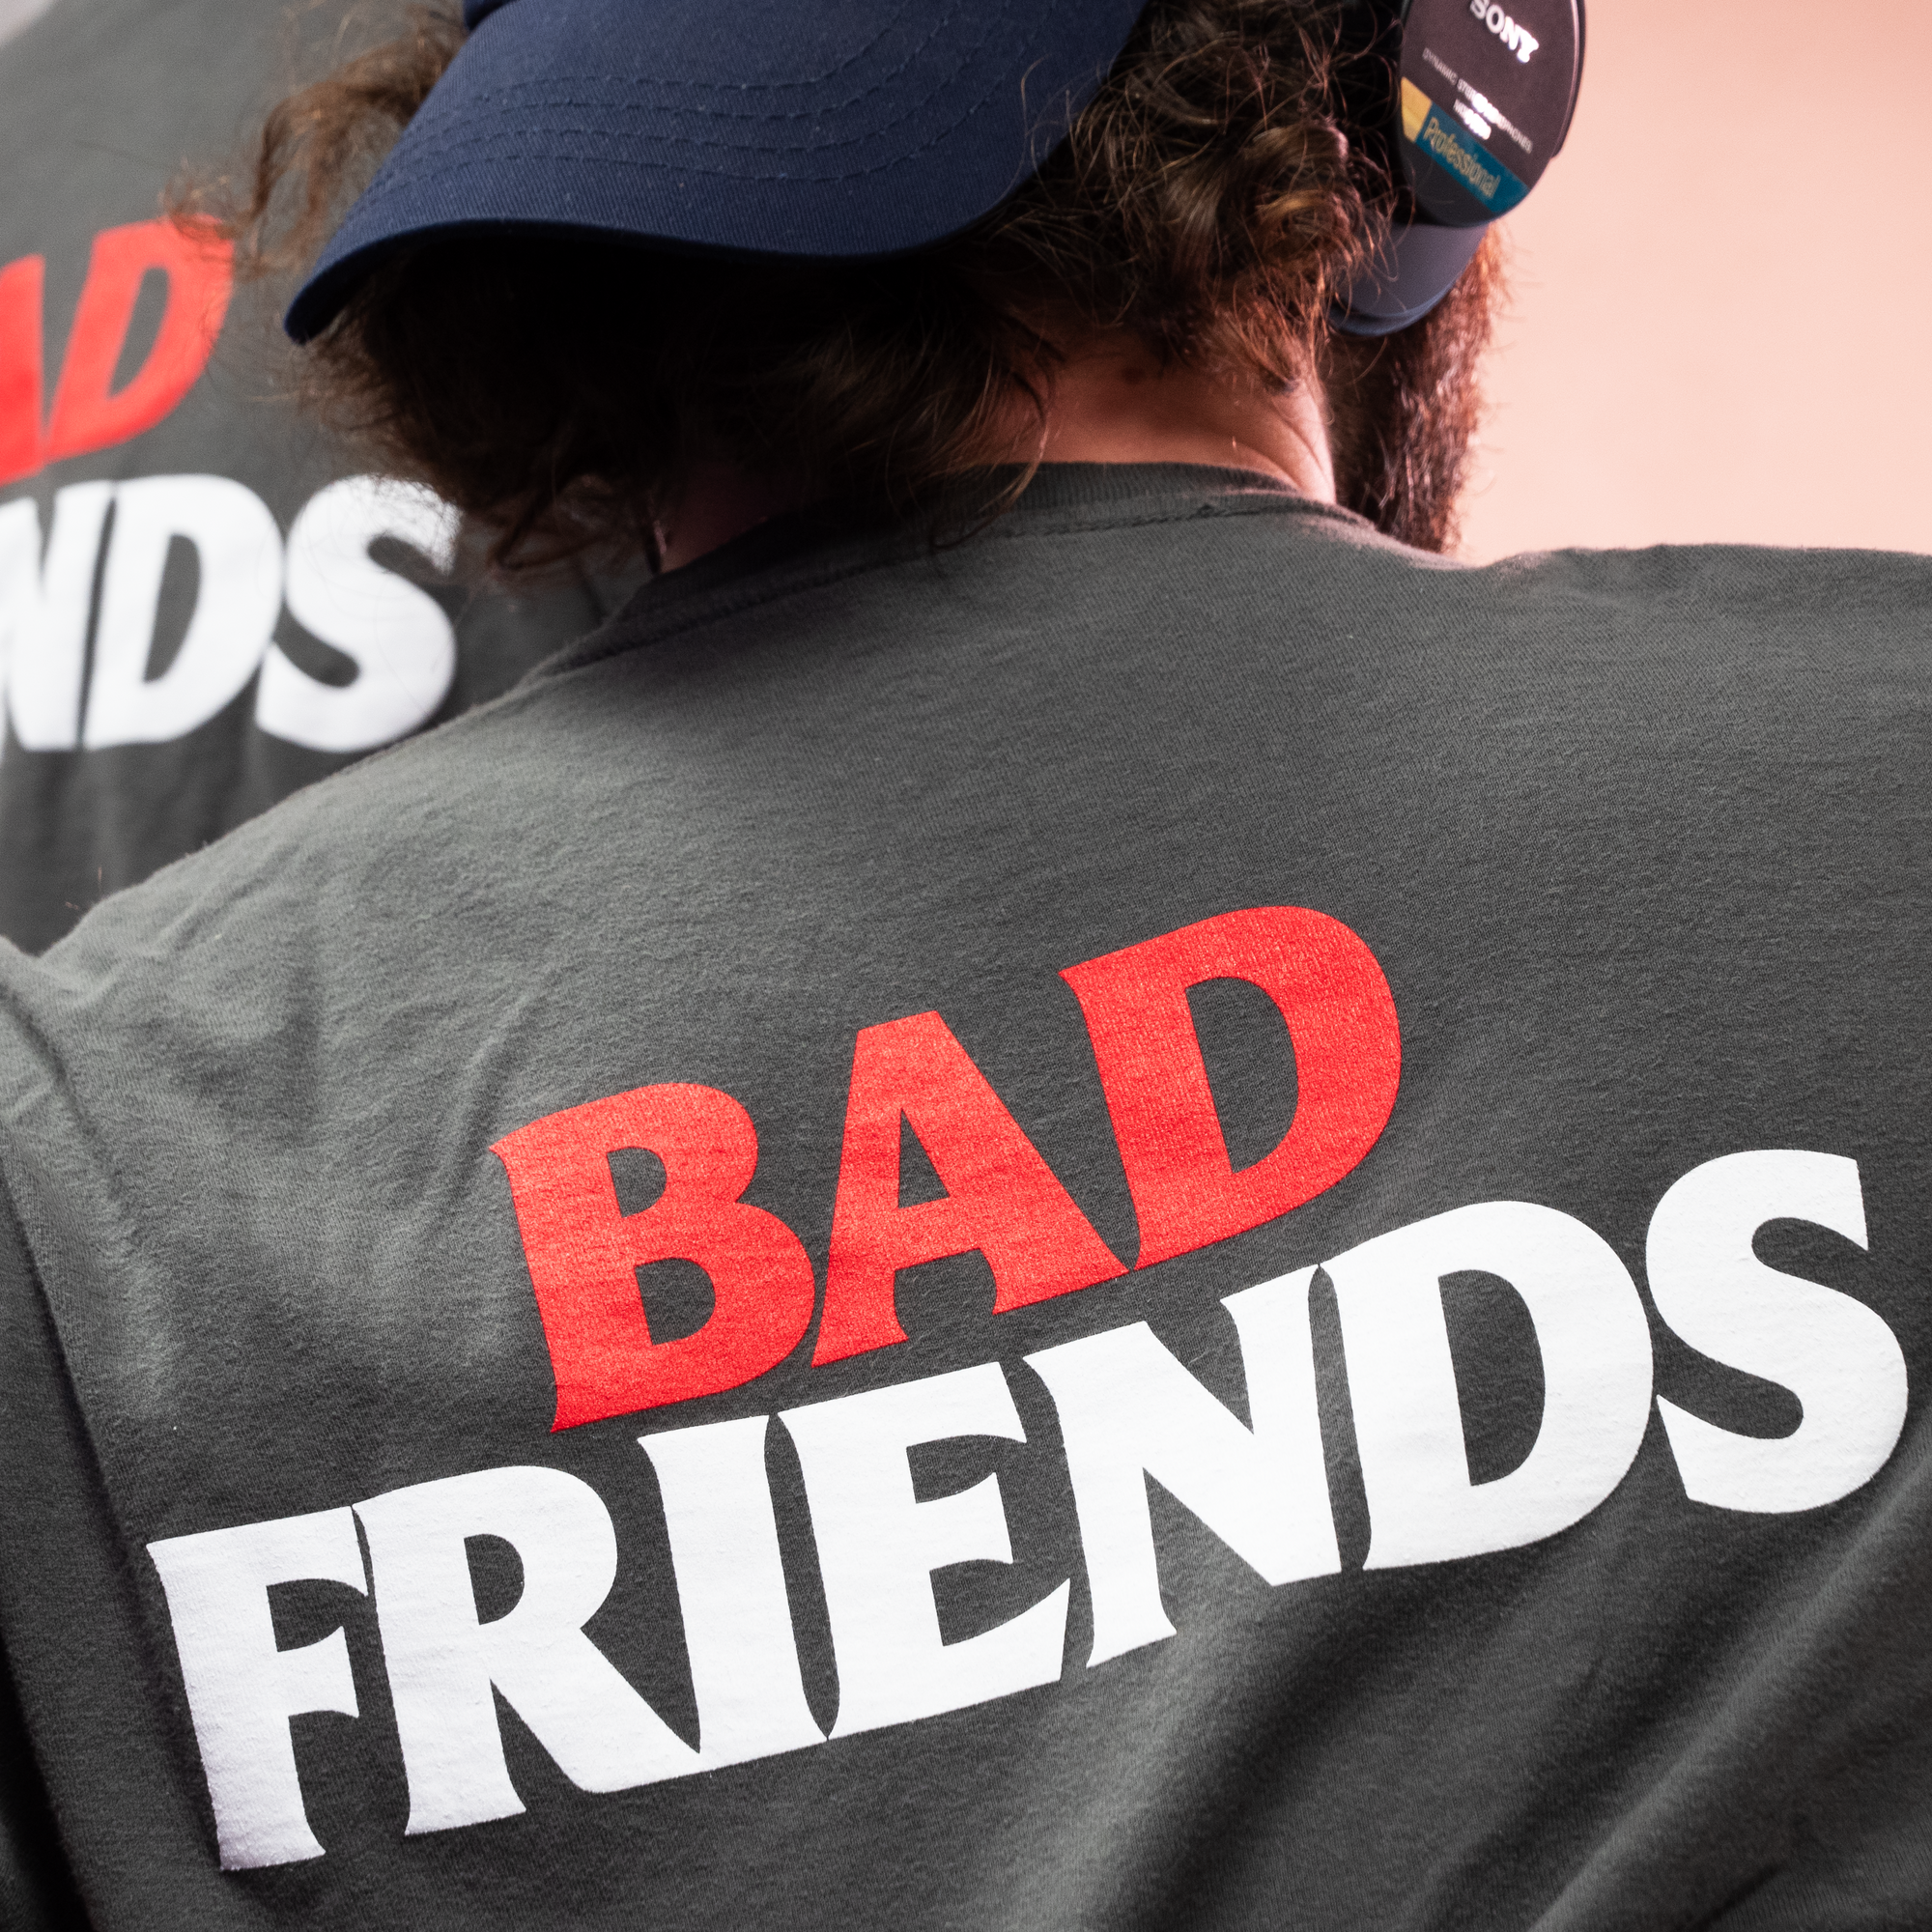 GOOD TIMES BAD FRIENDS Classic T-Shirt Official Merch RB1111 - Bad Friends  Shop